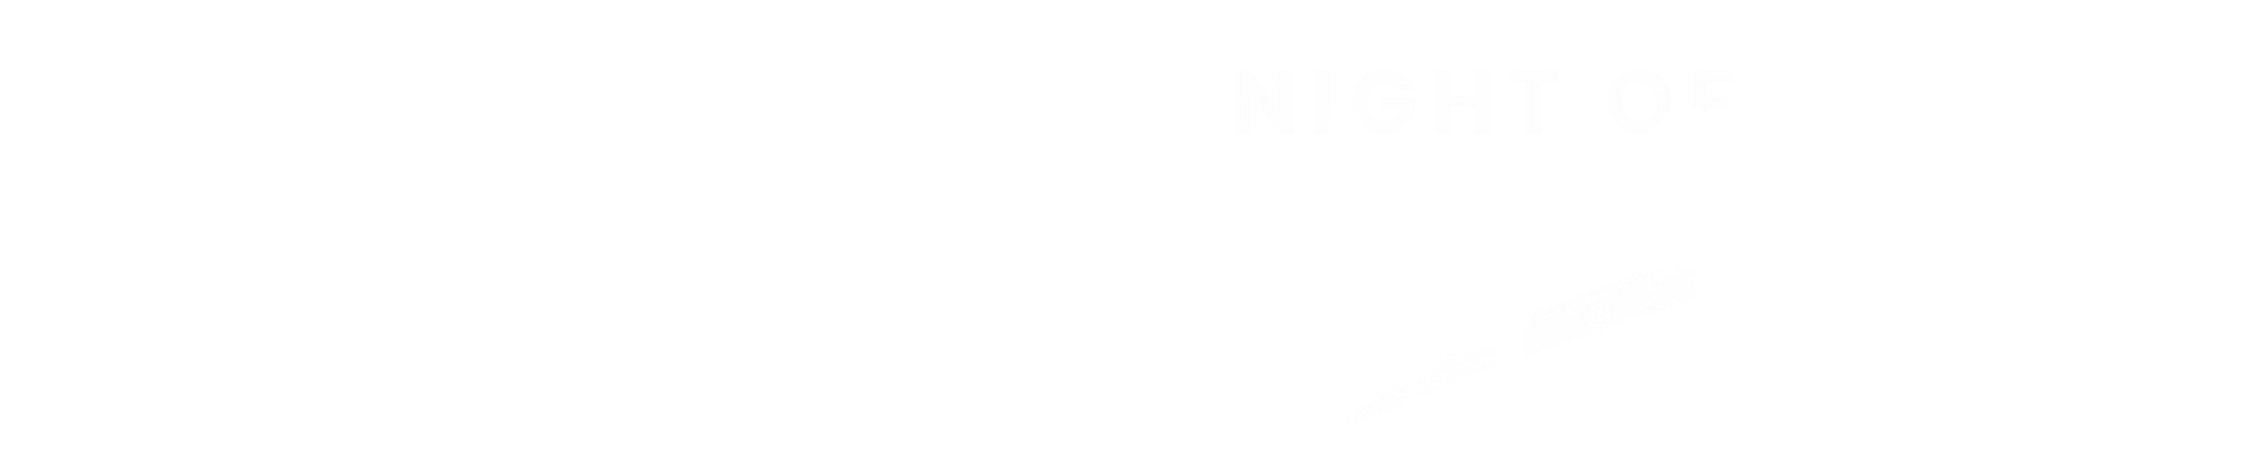 Night of Hope Logo